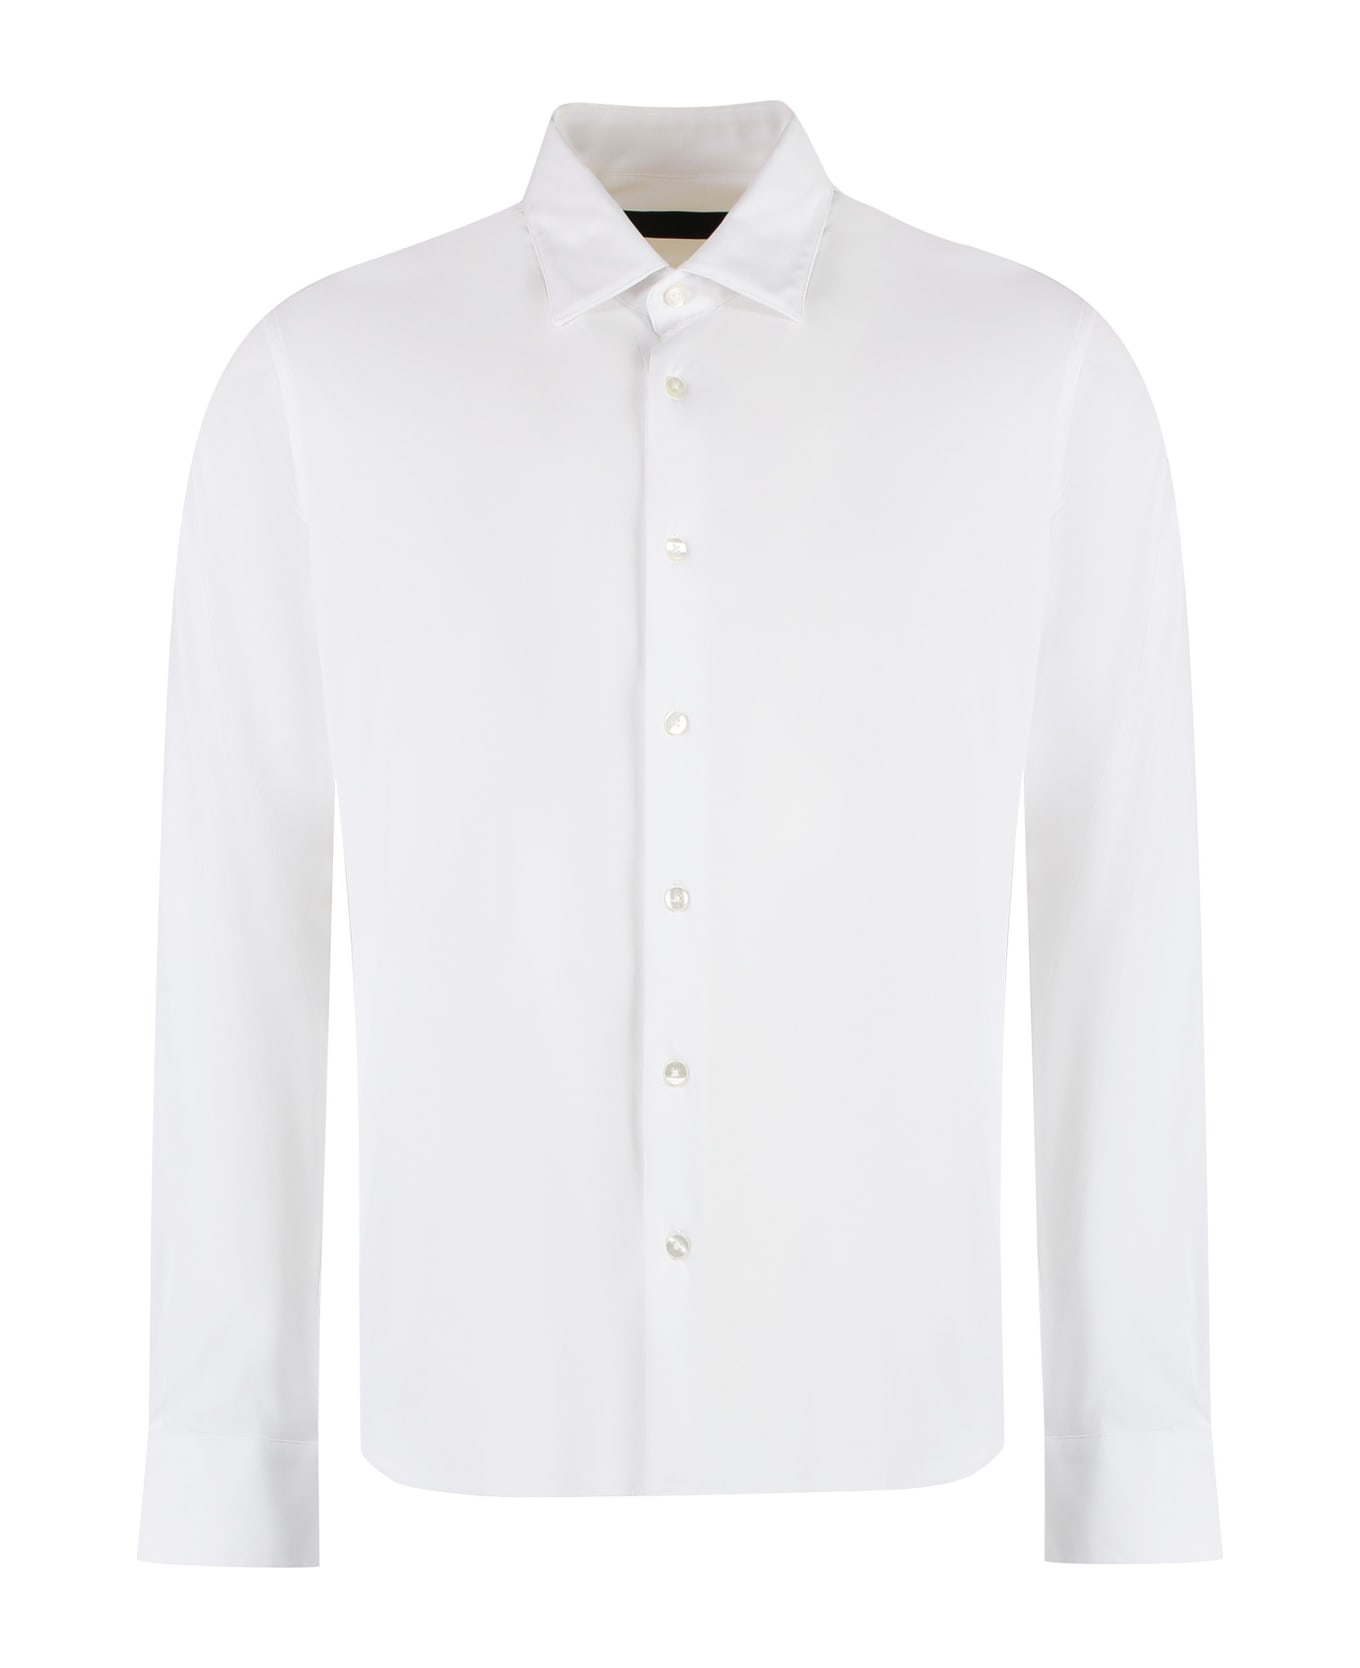 RRD - Roberto Ricci Design Technical Fabric Shirt - Bianco シャツ